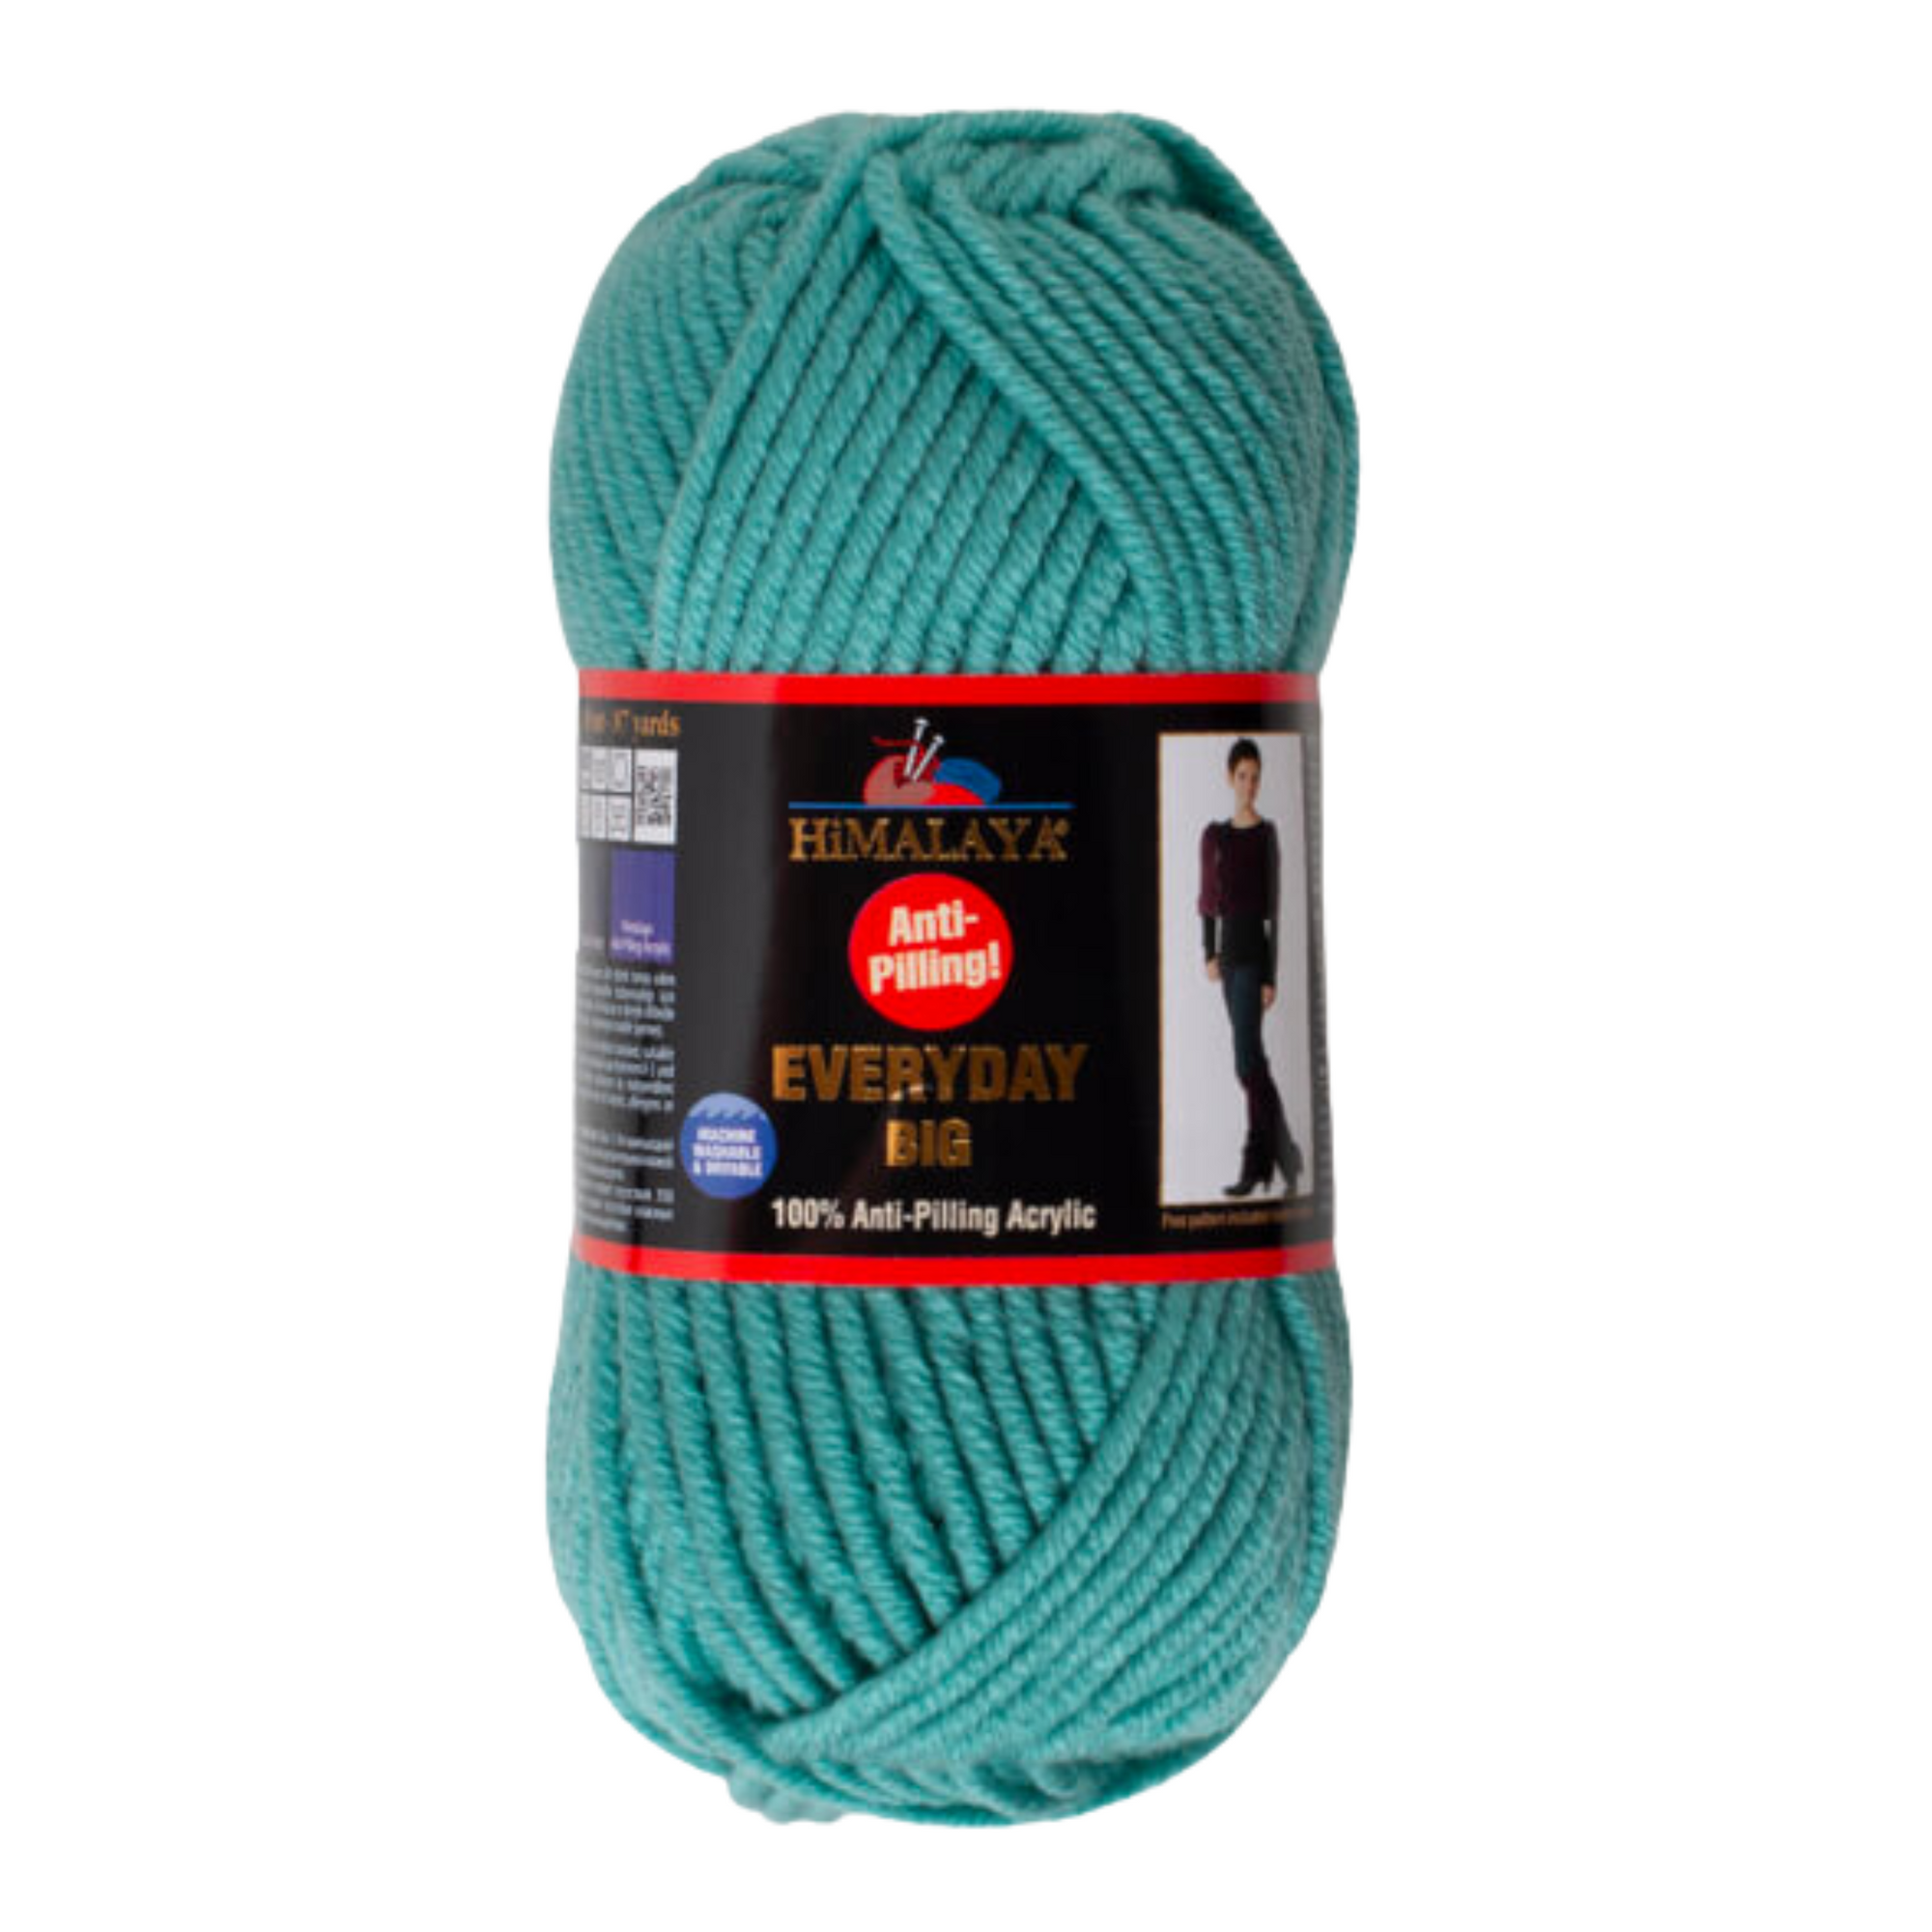 Himalaya Everyday 100% Anti-Pilling Acrylic Yarn,  Dark Red - 70815